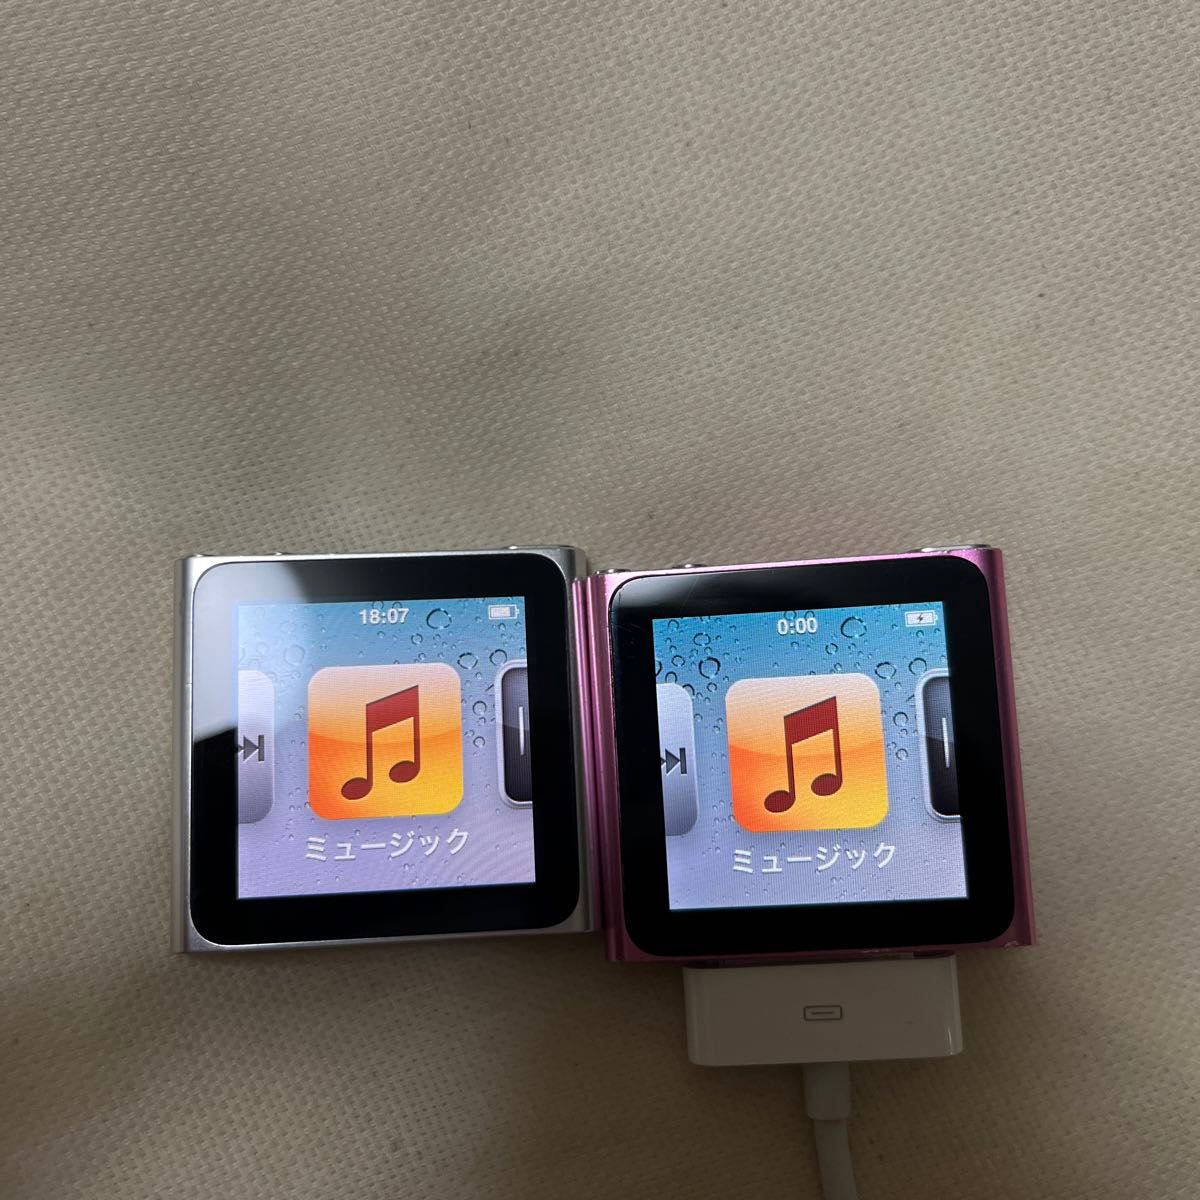 Apple iPod nano 第6世代 8GB 2個セット アップル ポータブルオーディオプレーヤー